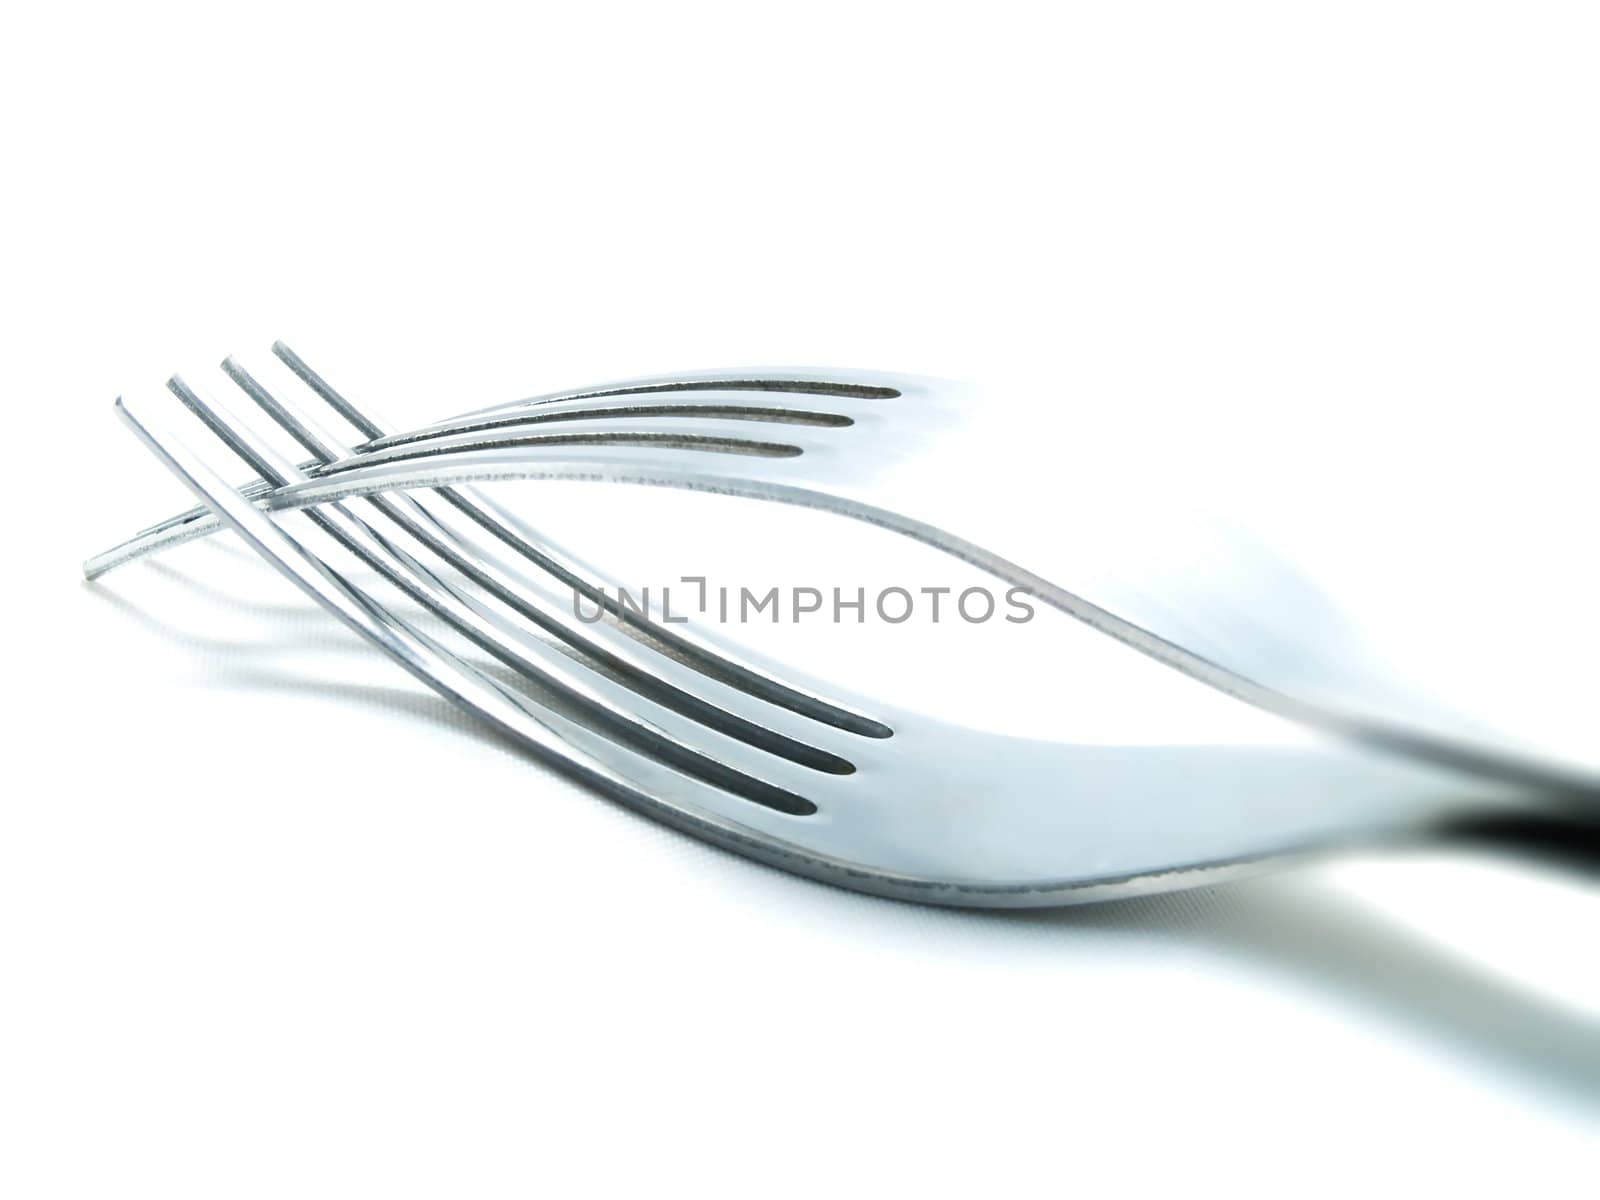 Forks by henrischmit